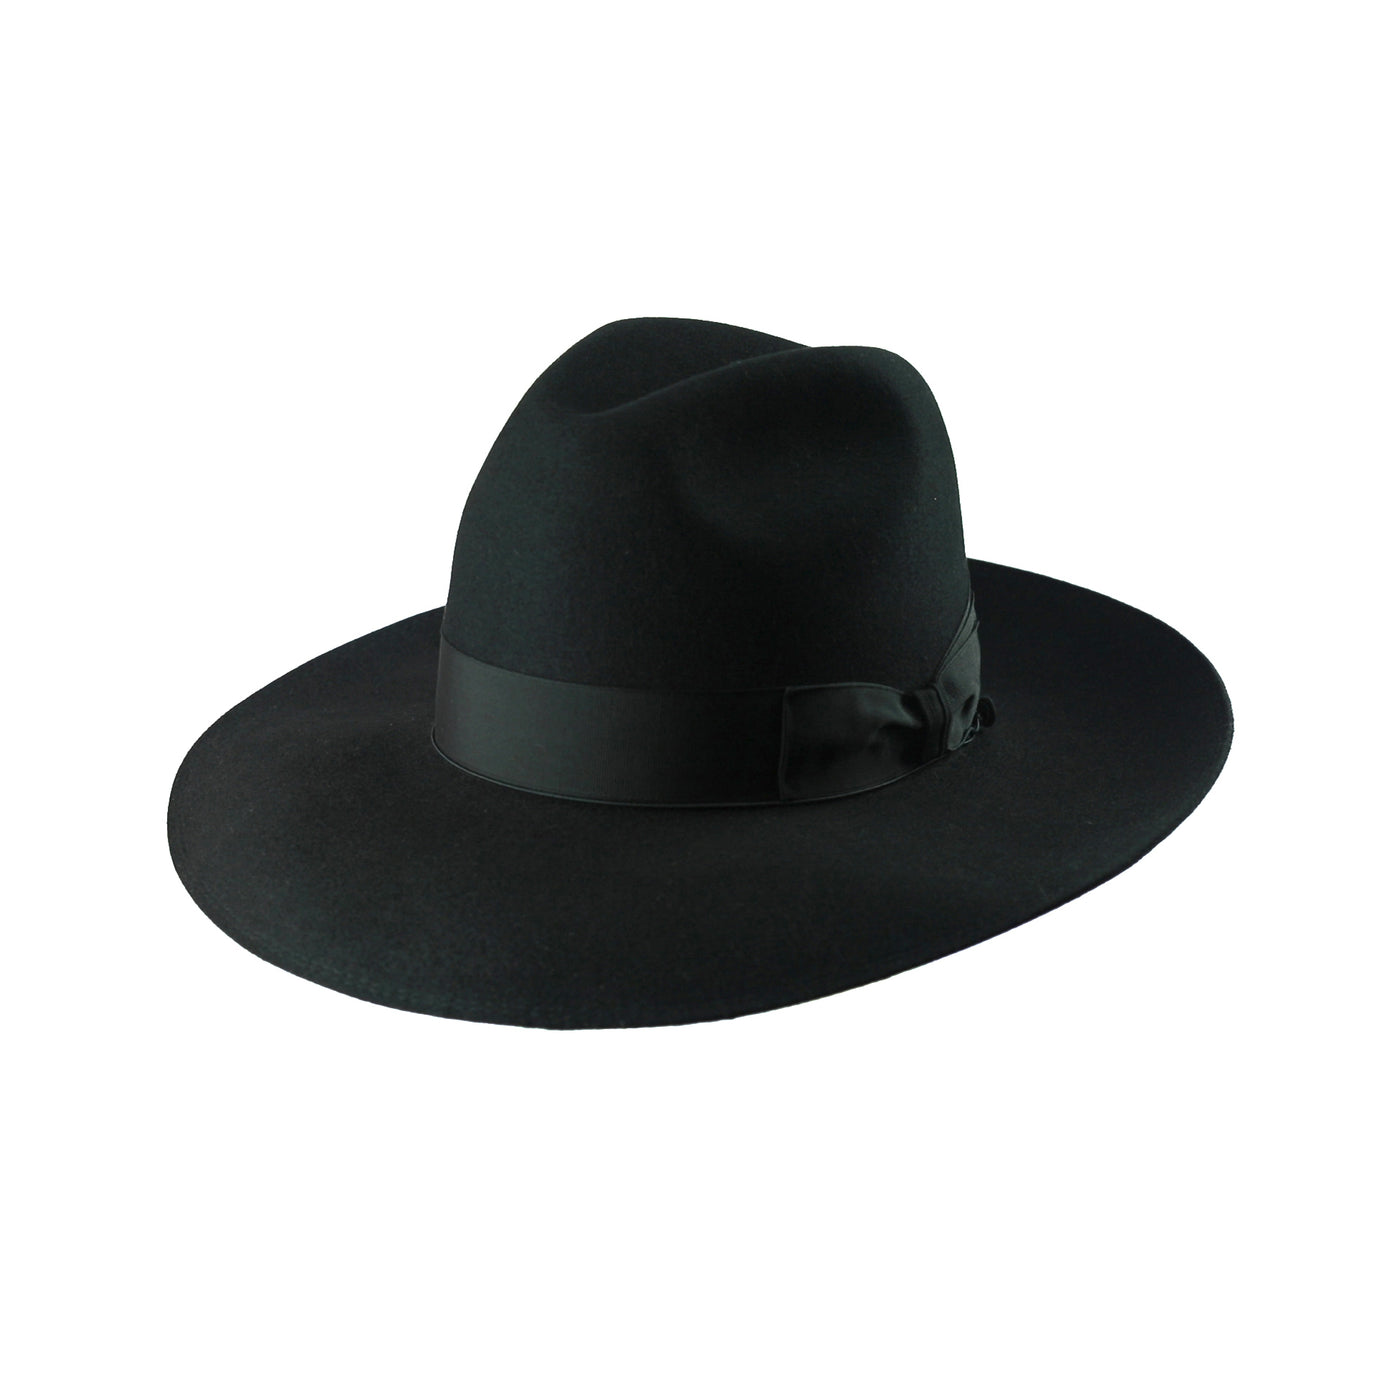 Valenza 358, product_type] - Borsalino for Atica fedora hat